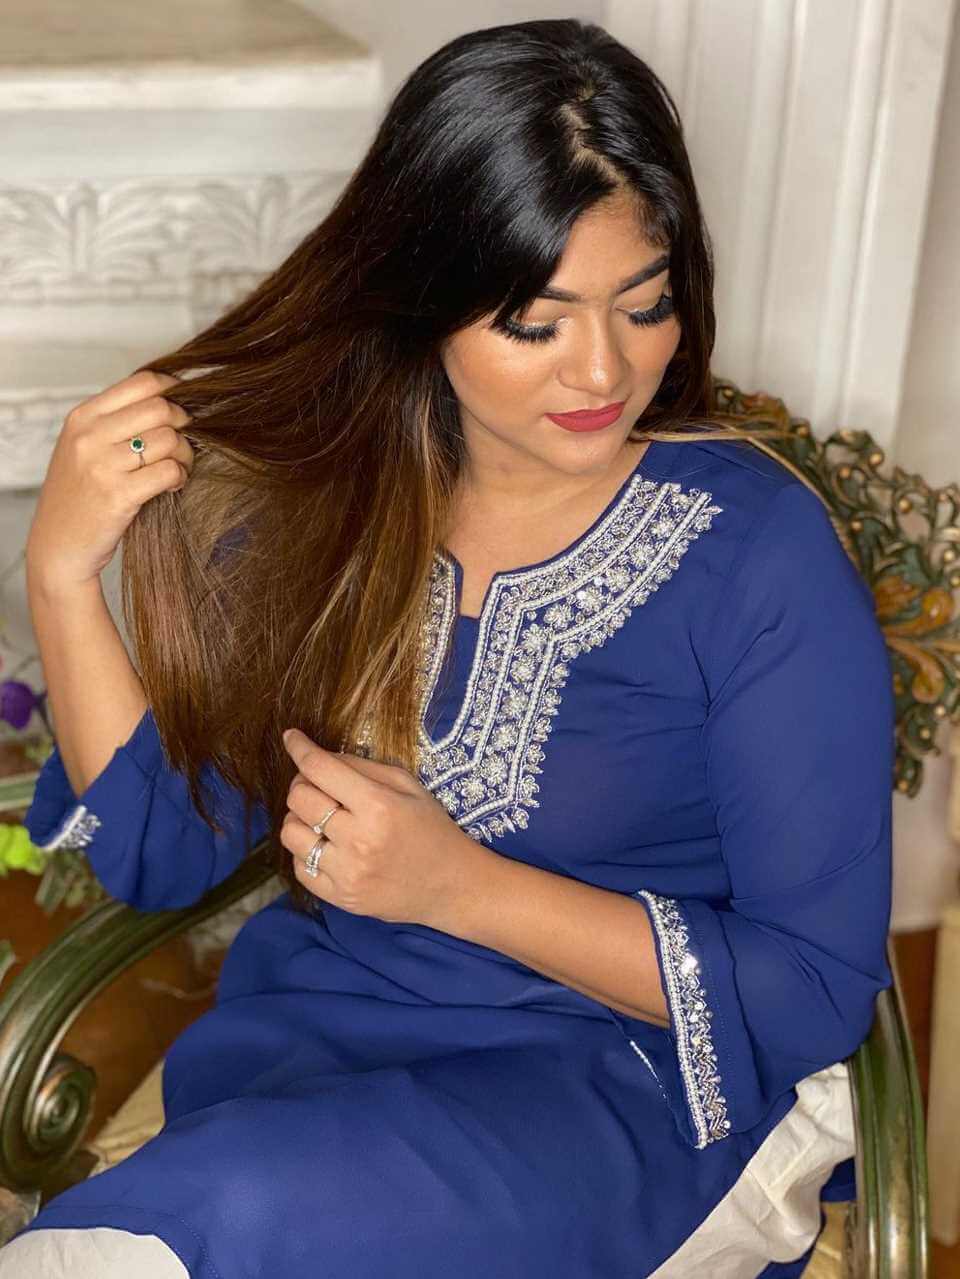 Shamma Rushafy Abantee Blue dress pic